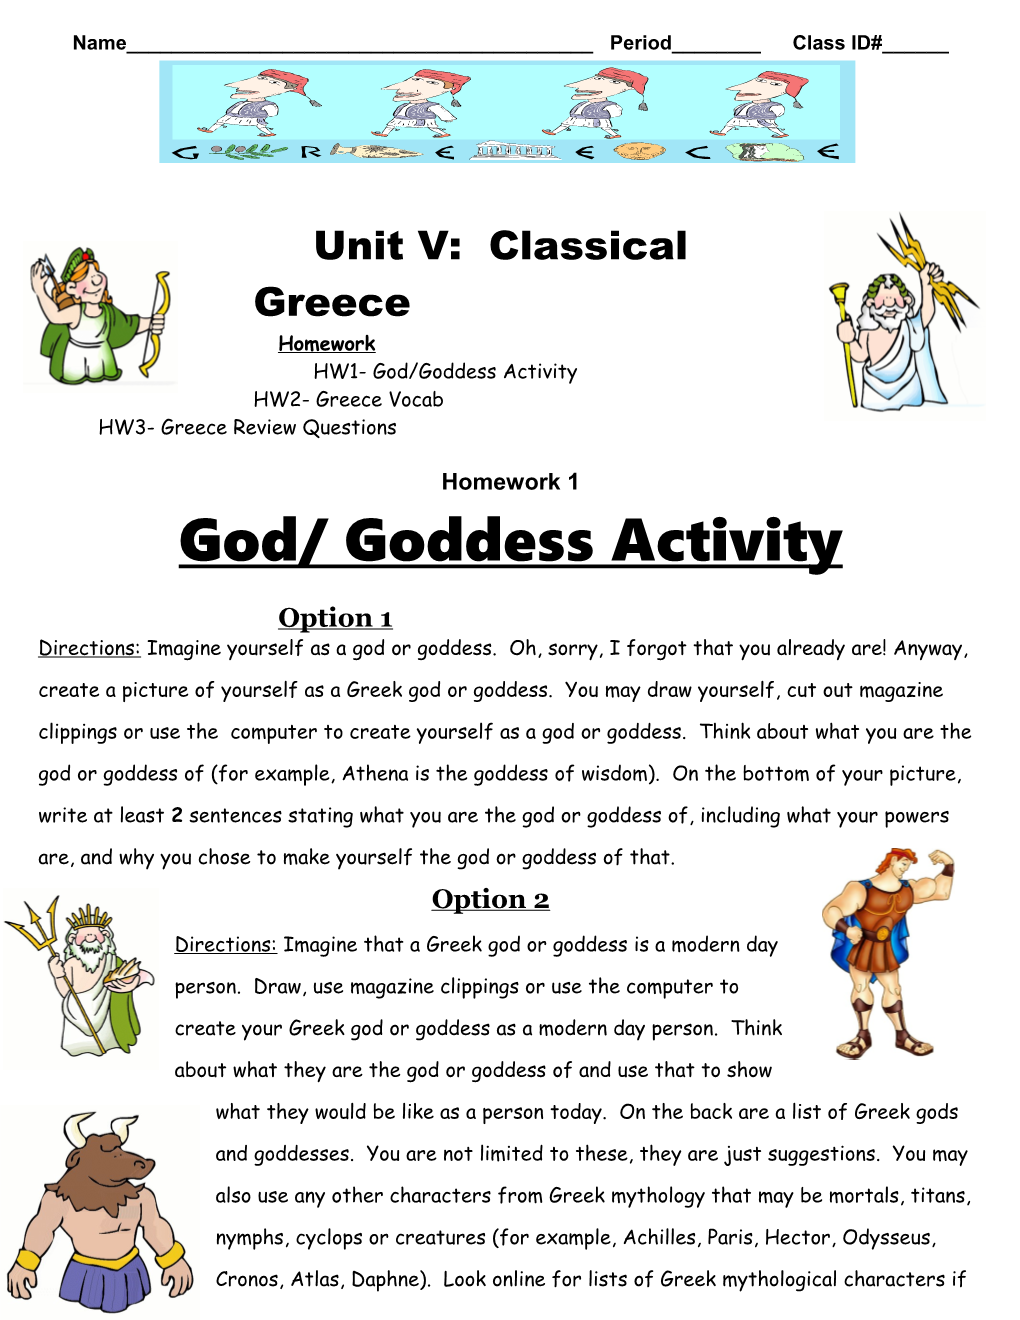 HW1- God/Goddess Activity